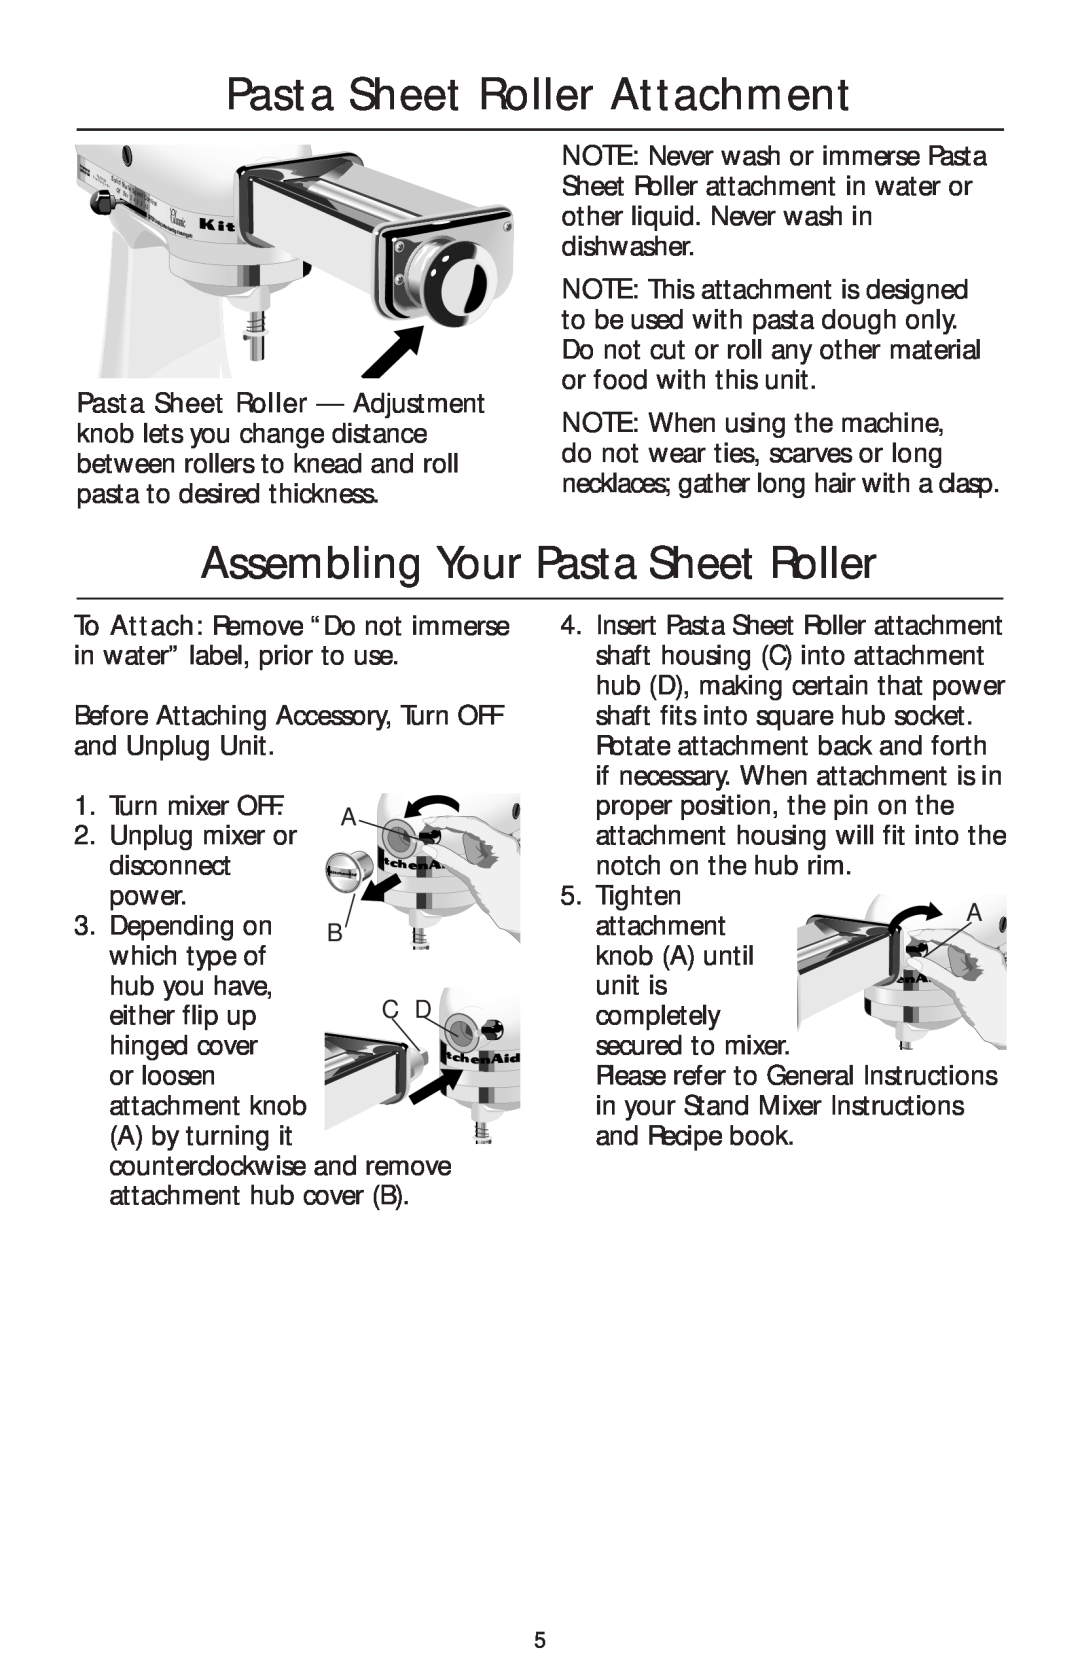 KitchenAid KPSA manual Pasta Sheet Roller Attachment, Assembling Your Pasta Sheet Roller 